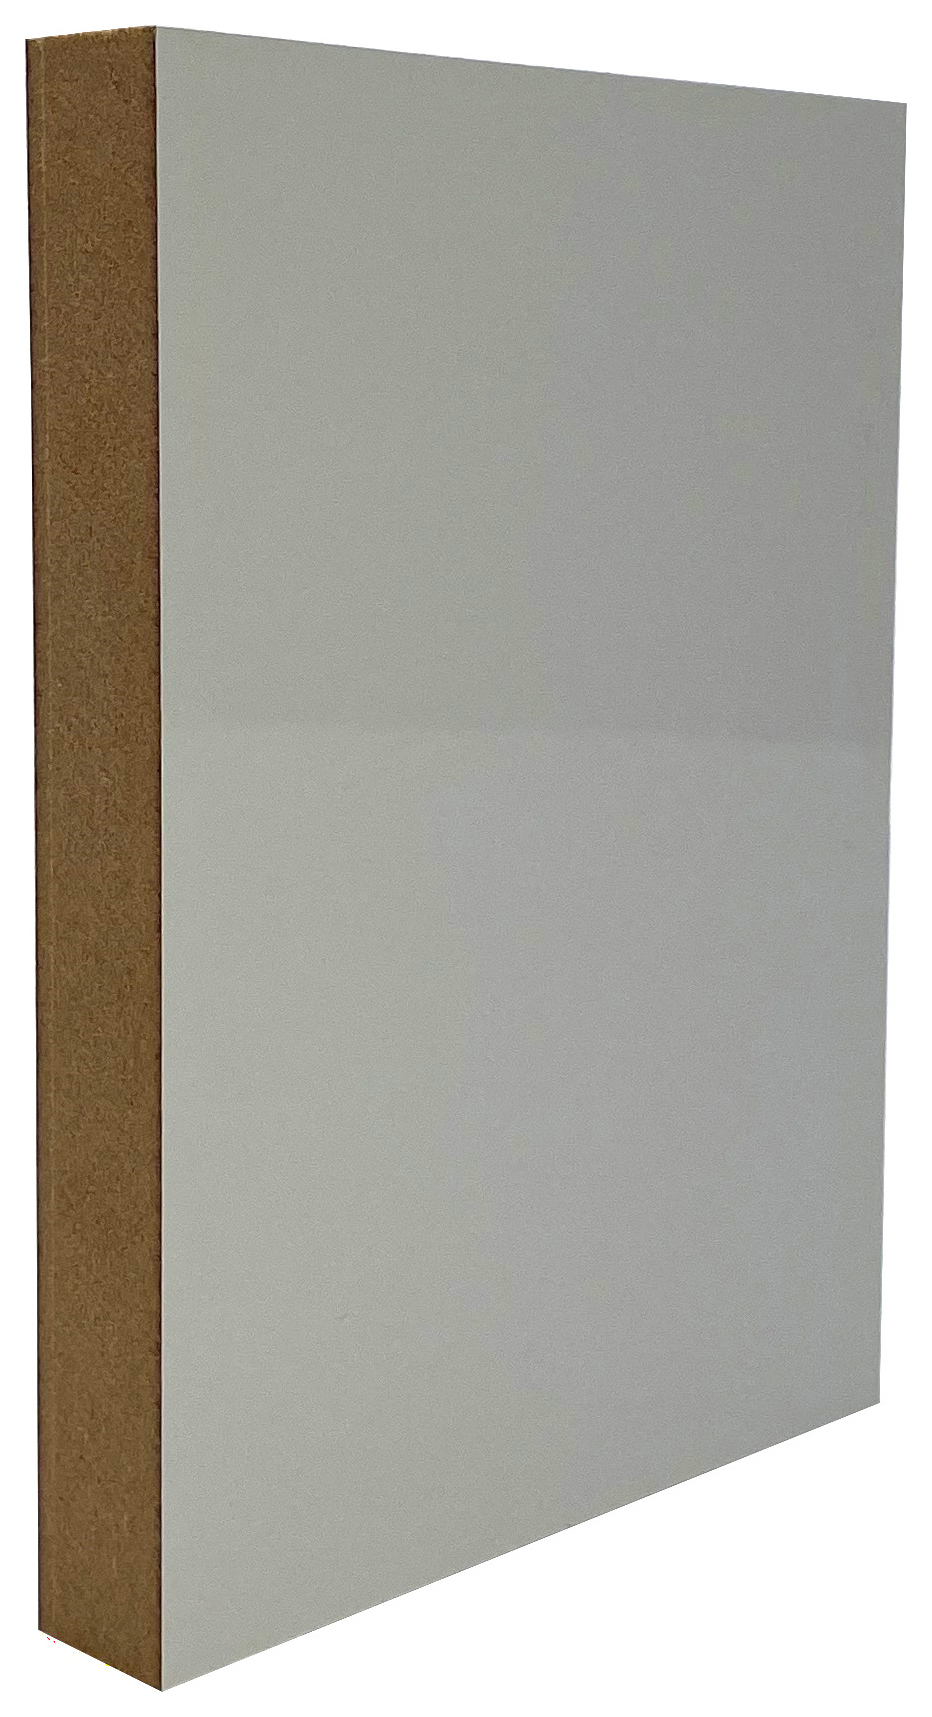 Wickes Orlando/Madison Gloss Grey Colour Block Sample - 148mm x 105mm x 18mm